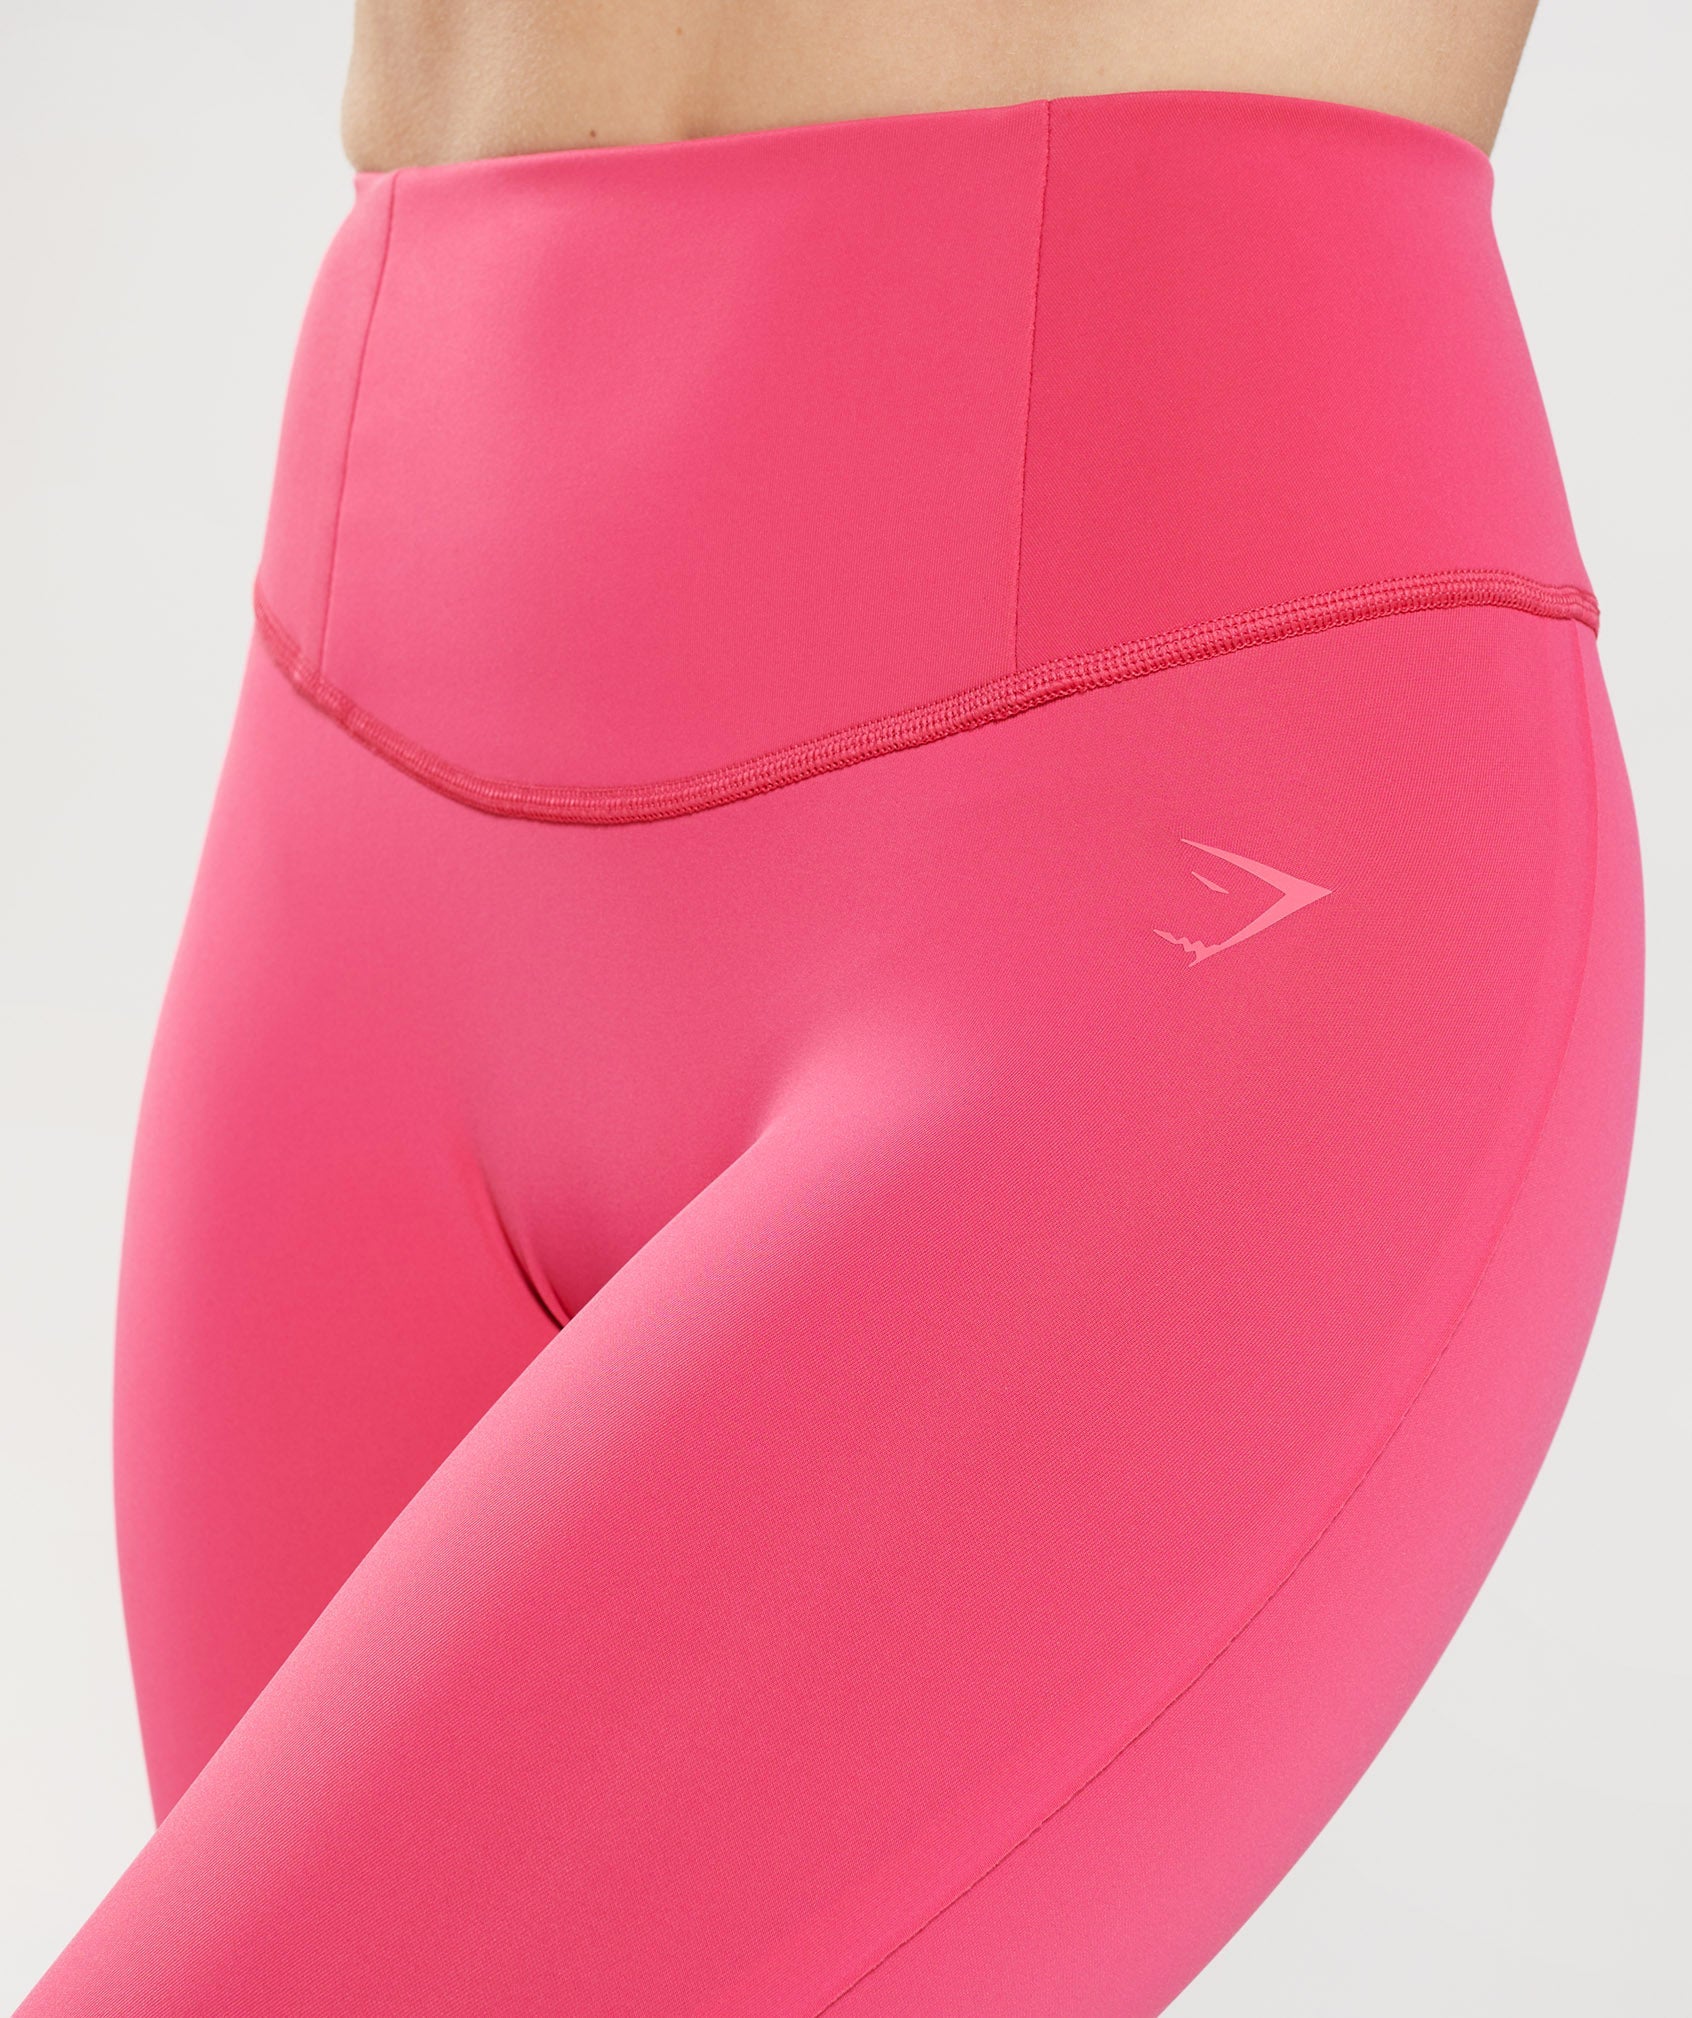 Get noticed in these vibrant Gymshark studio leggings